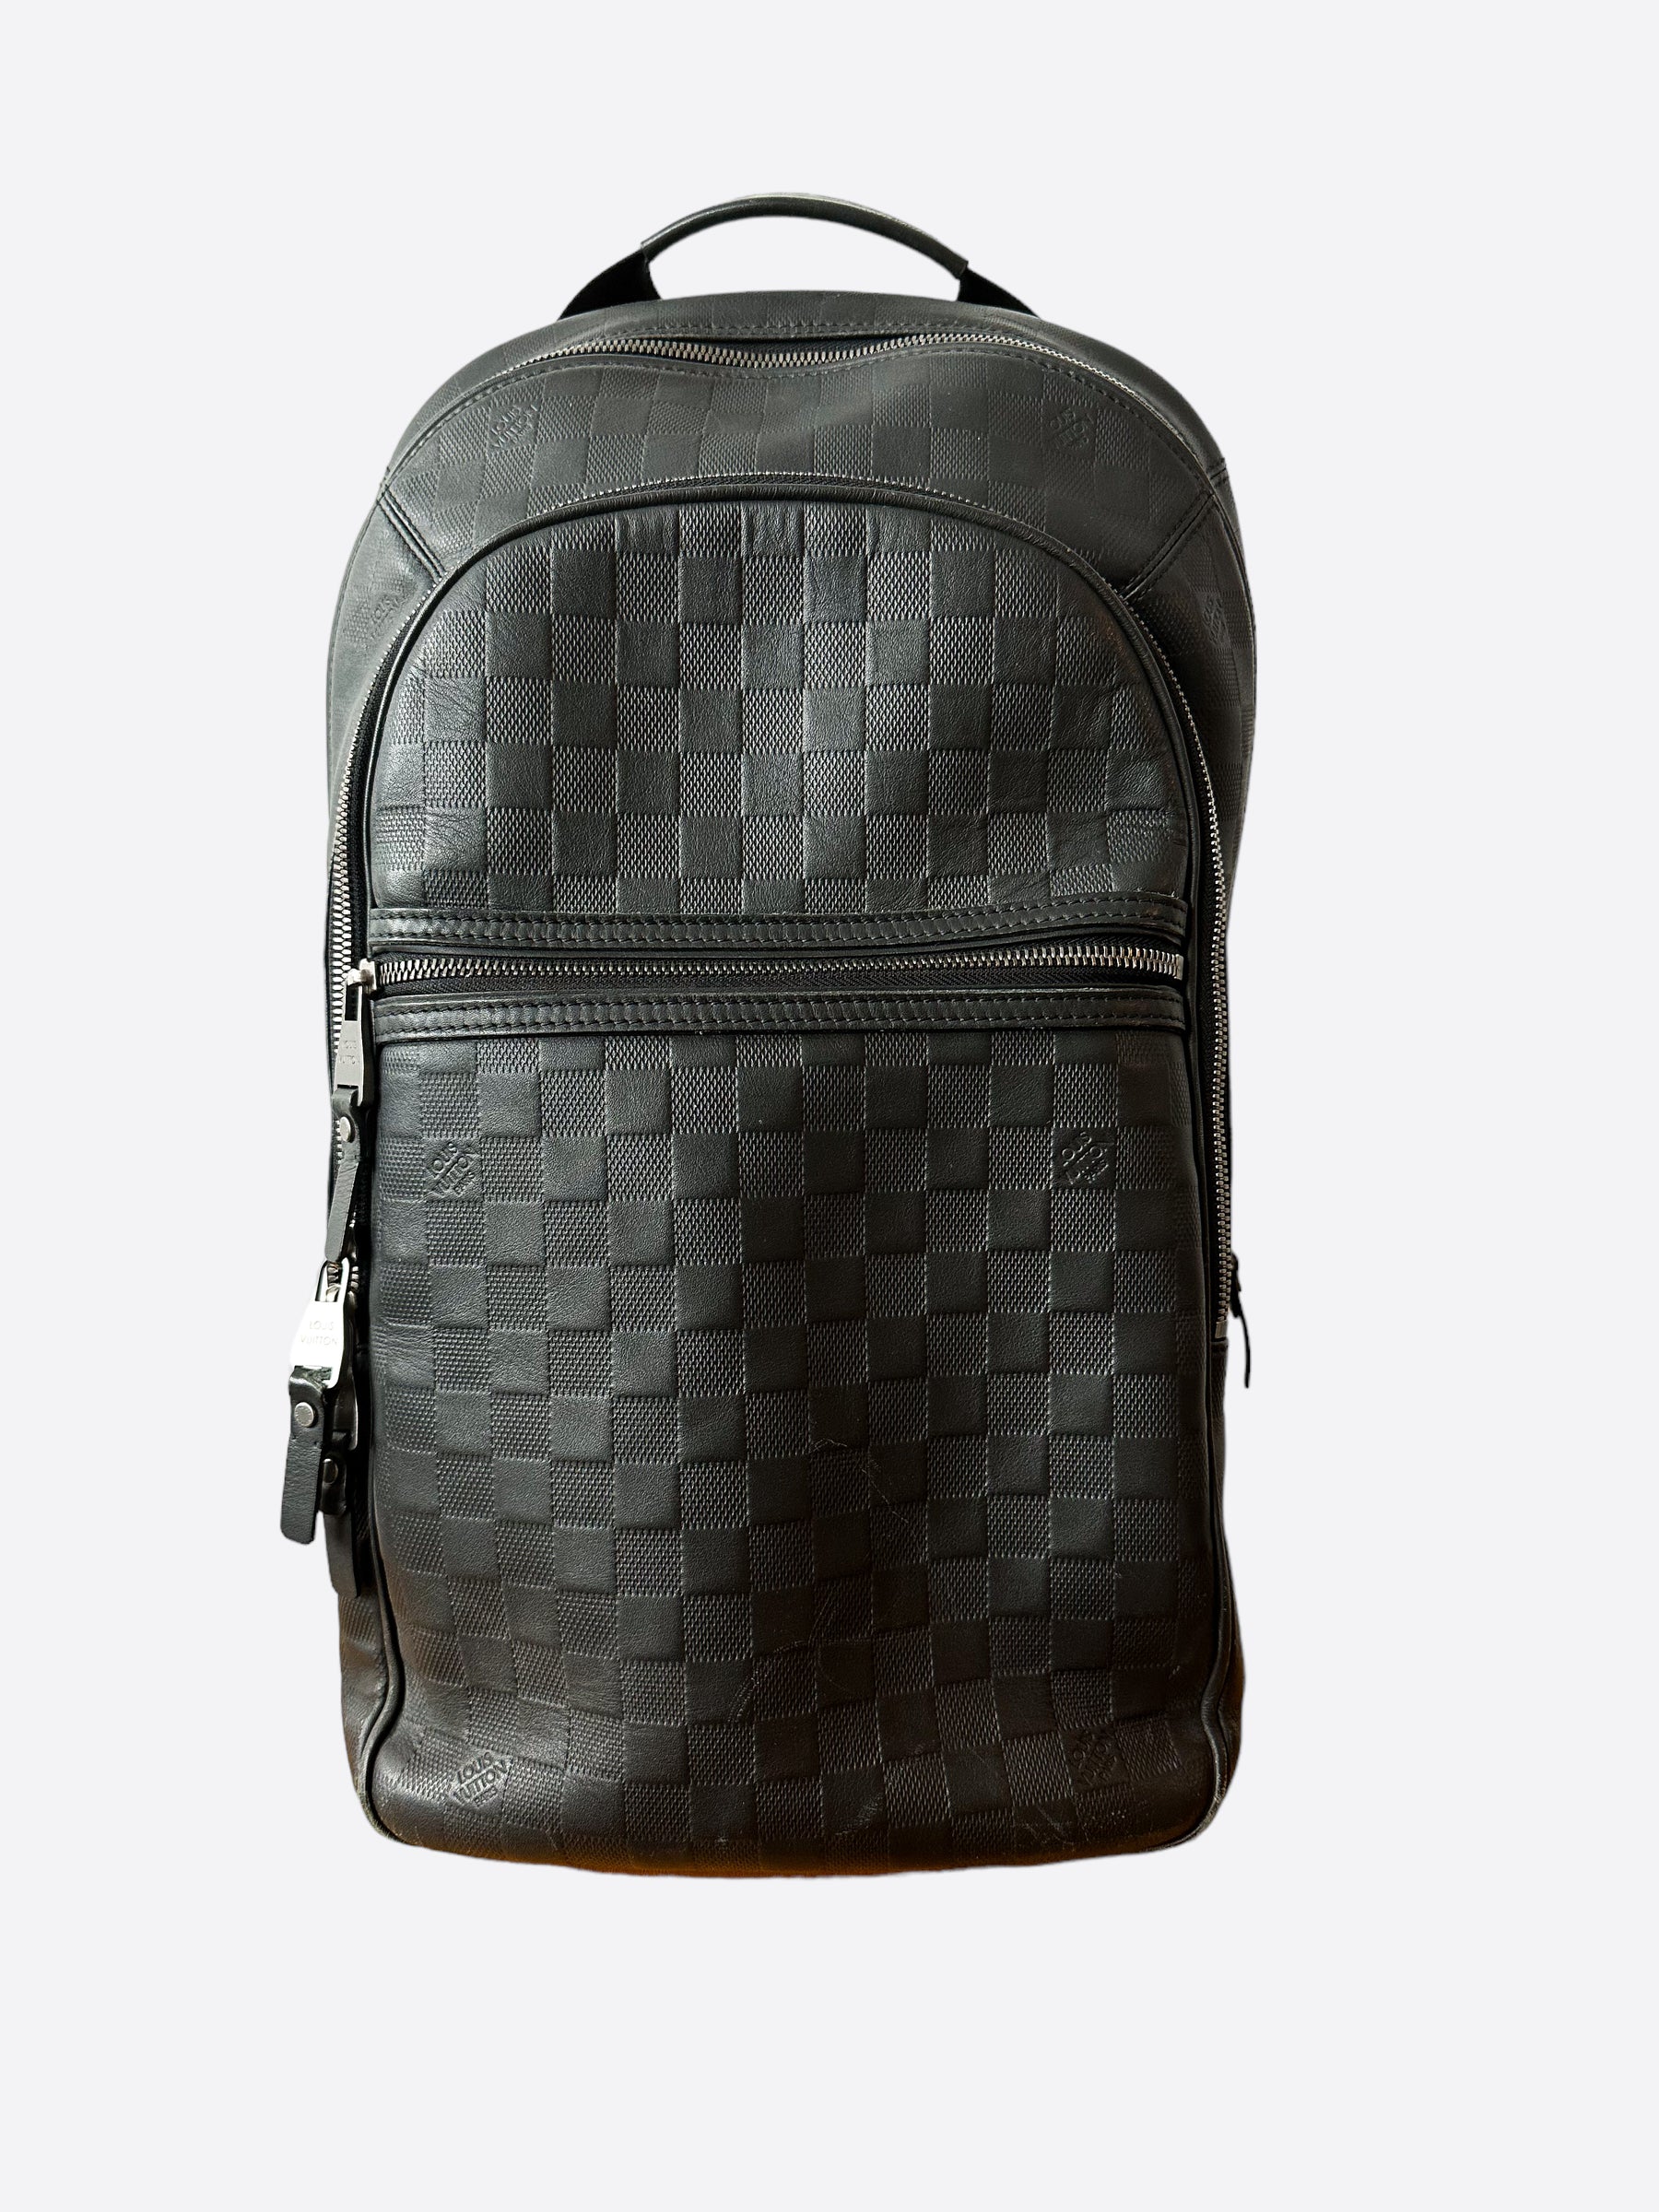 louis-vuitton backpack black